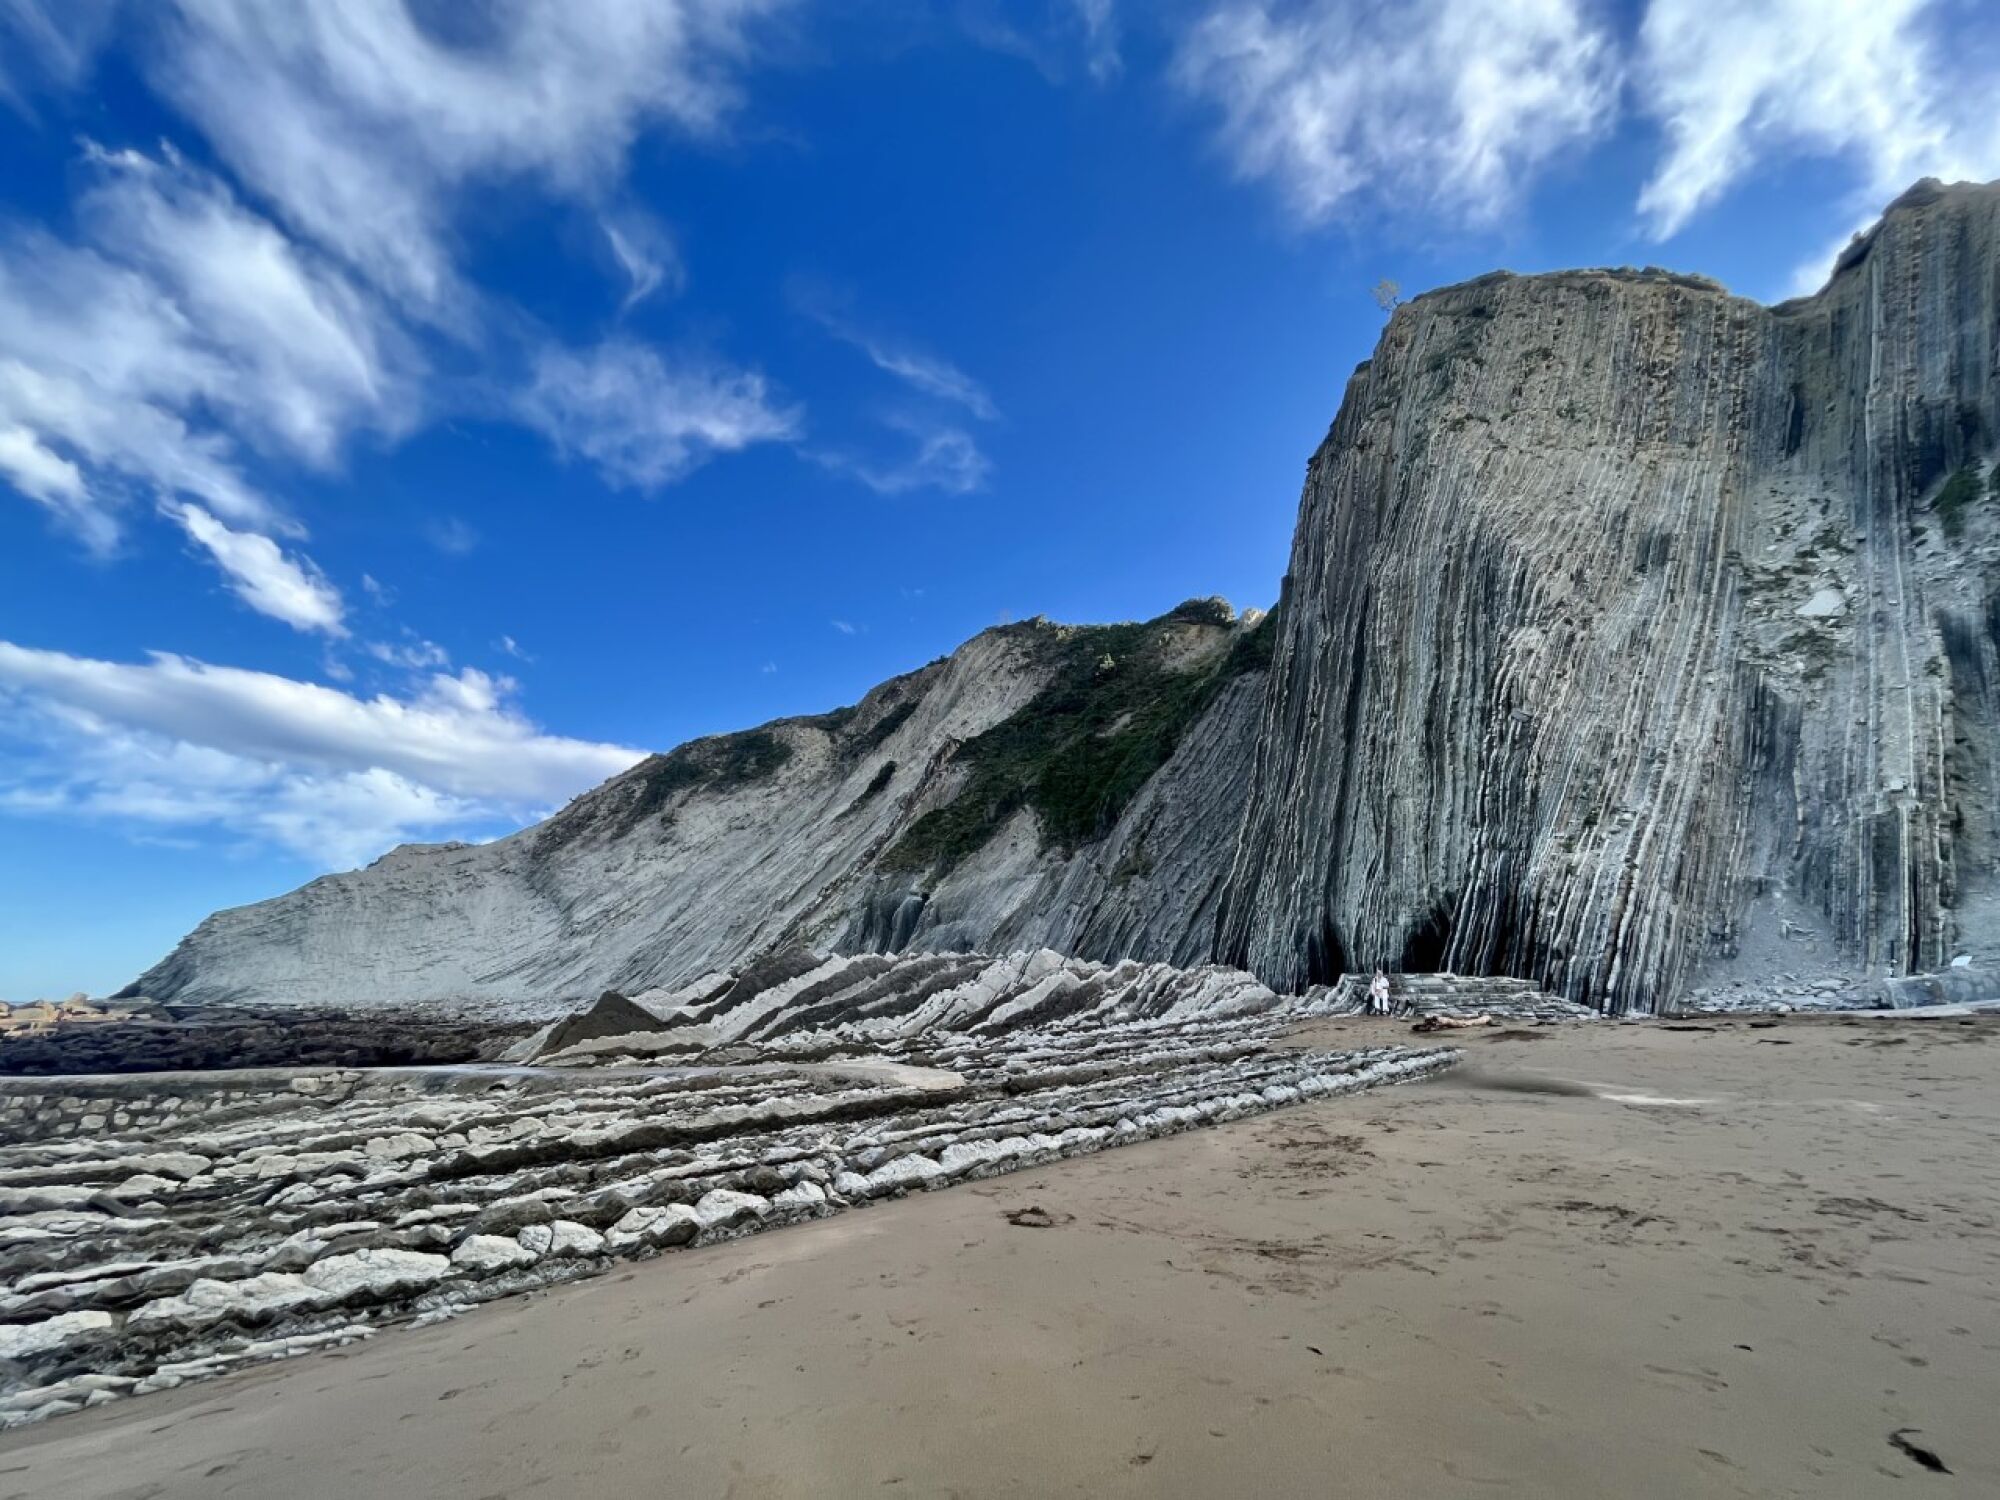 Zumaia, İspanya'daki plajda fliş kaya oluşumları.